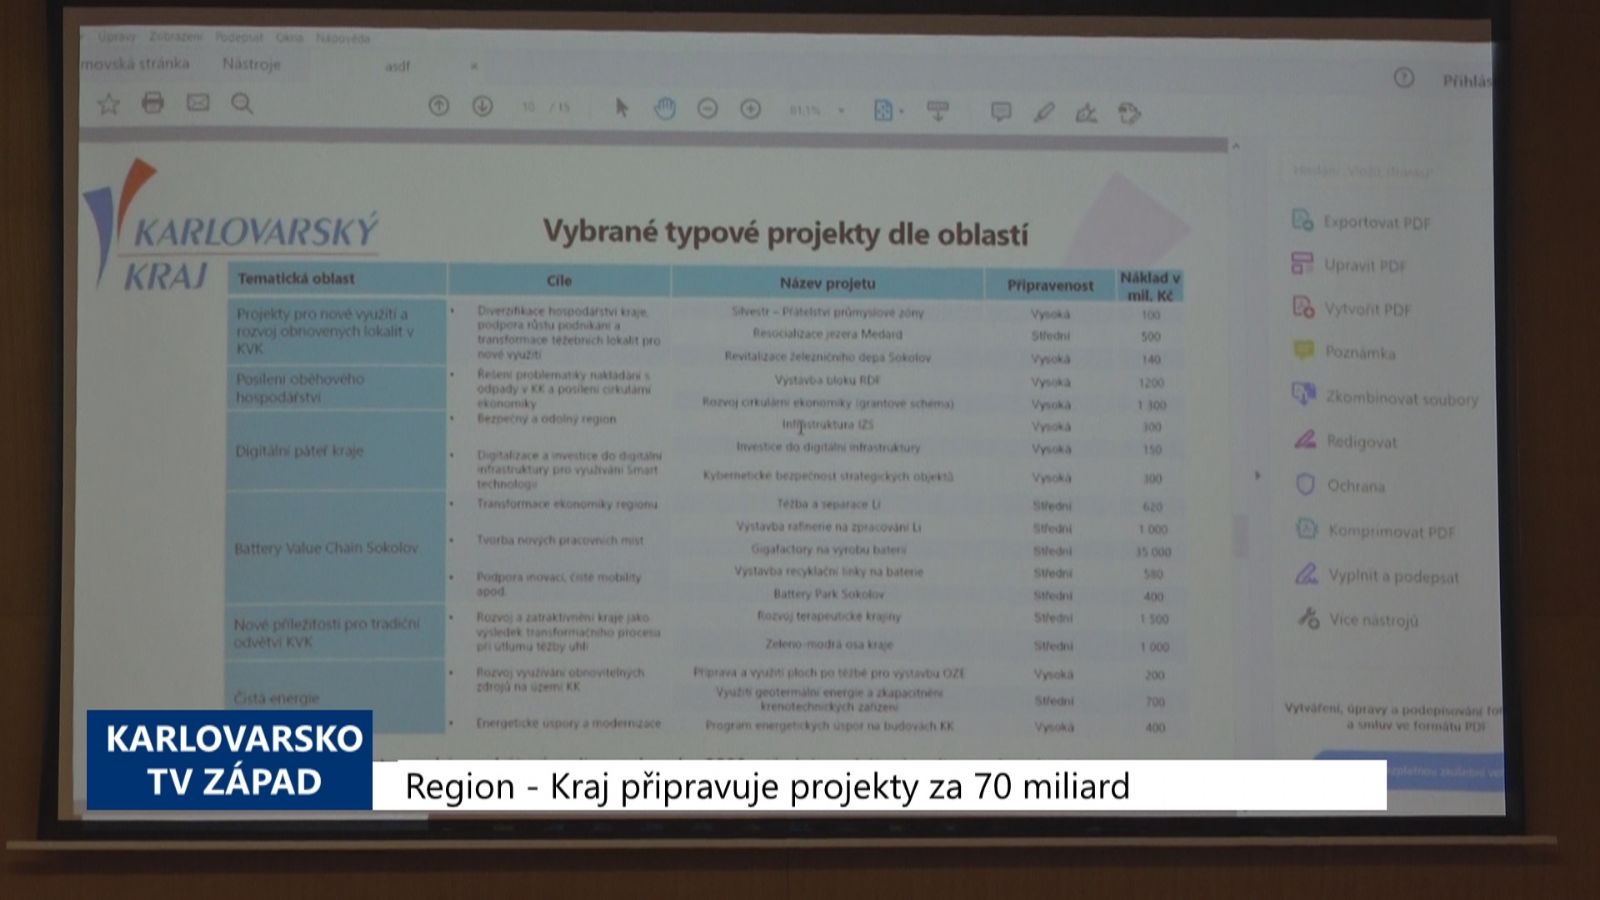 Region: Kraj připravuje projekty za 70 miliard (TV Západ)